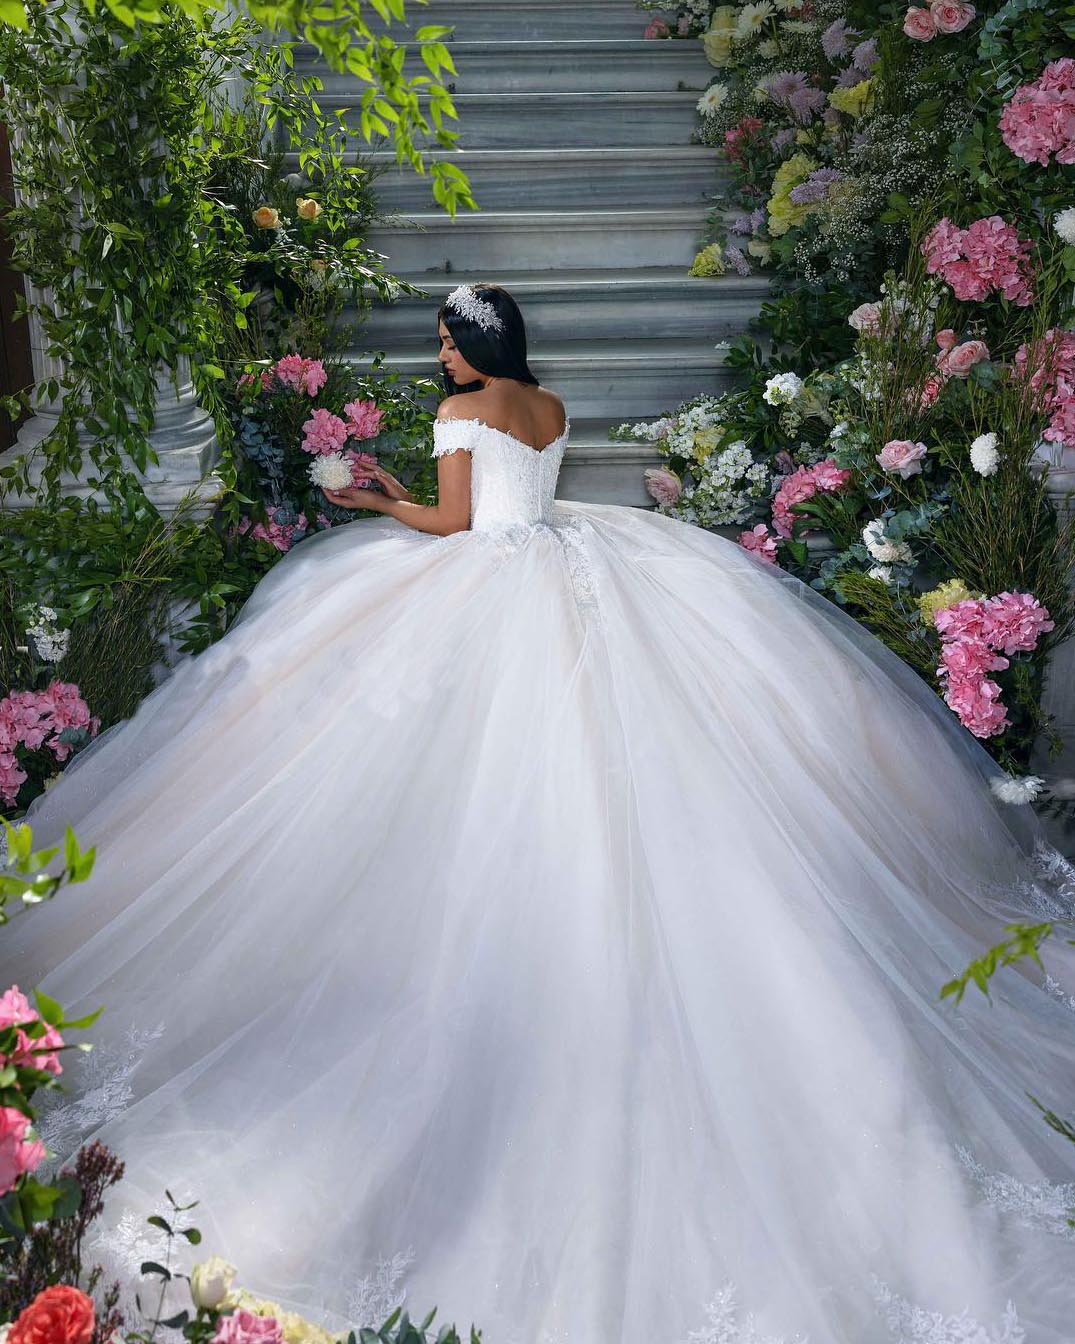 1164 Wedding Dress - Wedding Atelier NYC Martina Liana - New York City  Bridal Boutique